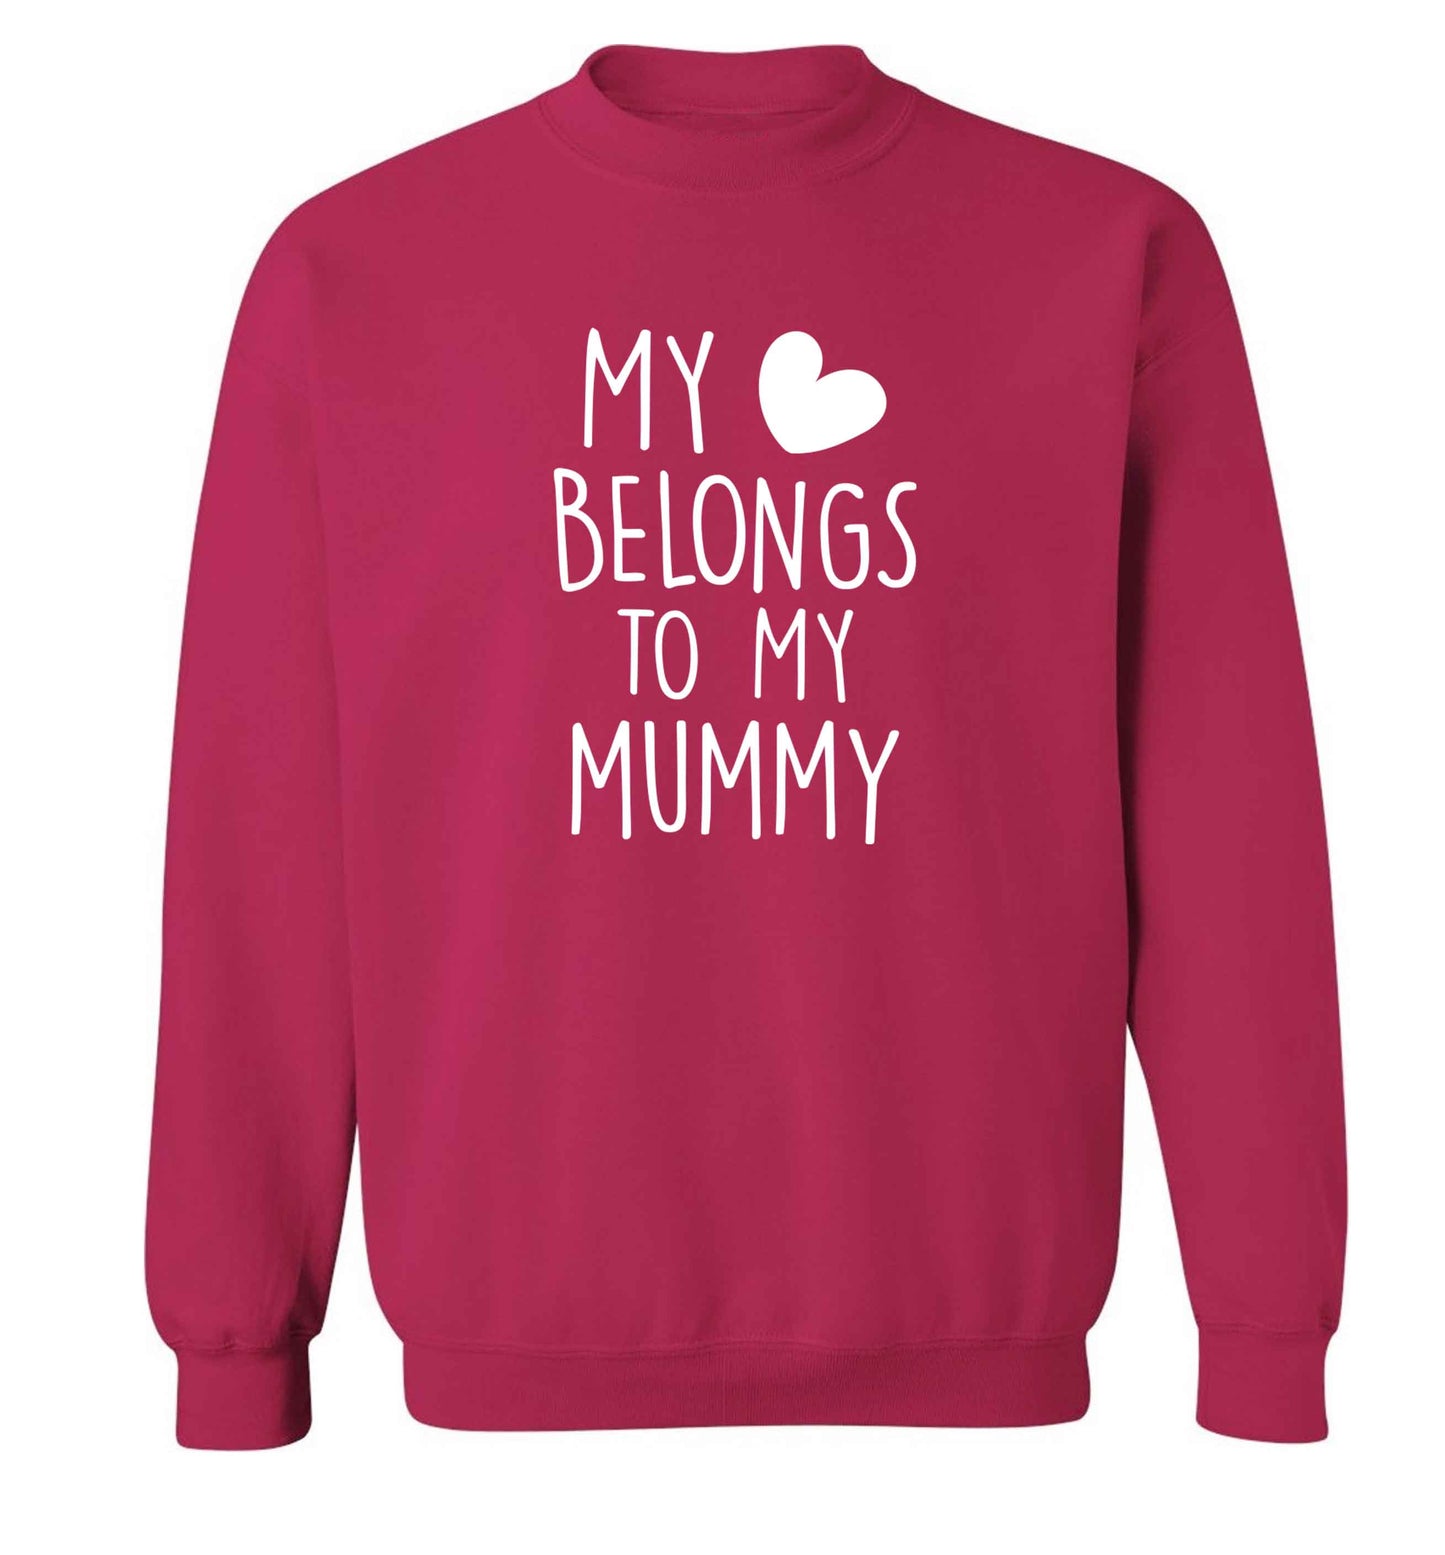 My heart belongs to my mummy adult's unisex pink sweater 2XL